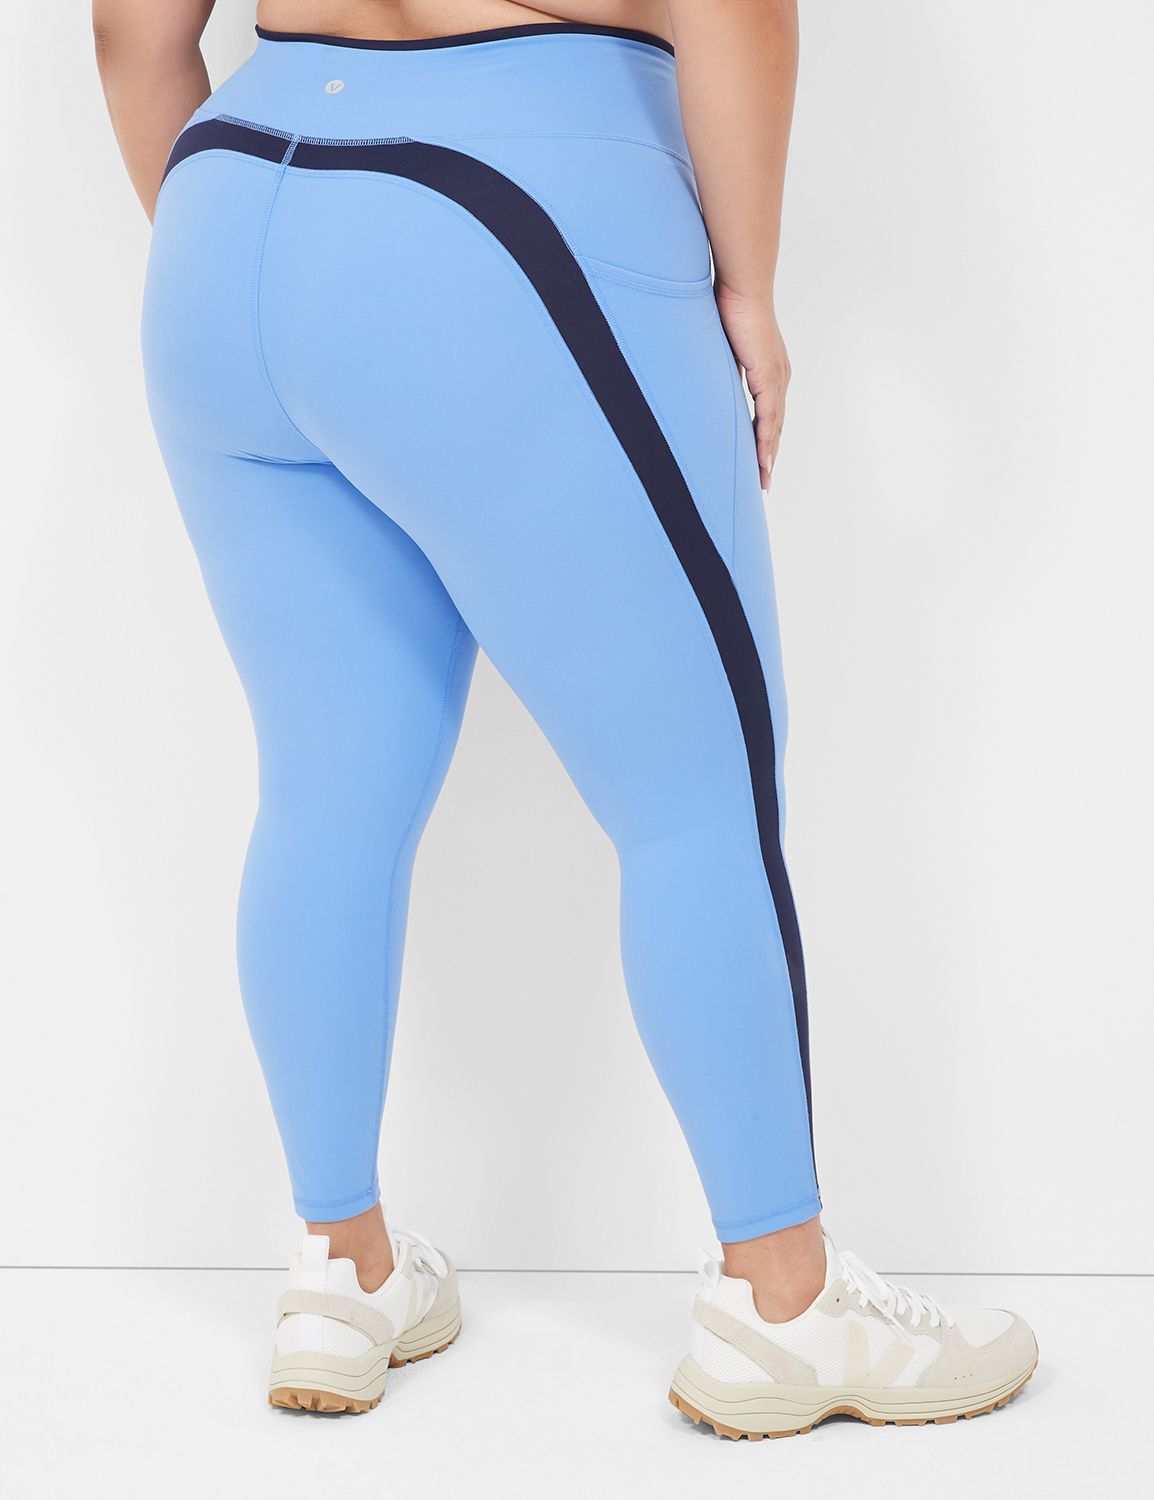 LEEMIIJUU Plus Size XXL Women Yoga Pants Sport leggings Push Up Tights Gym  Exercise High Waist Fitness Running Athletic Trousers